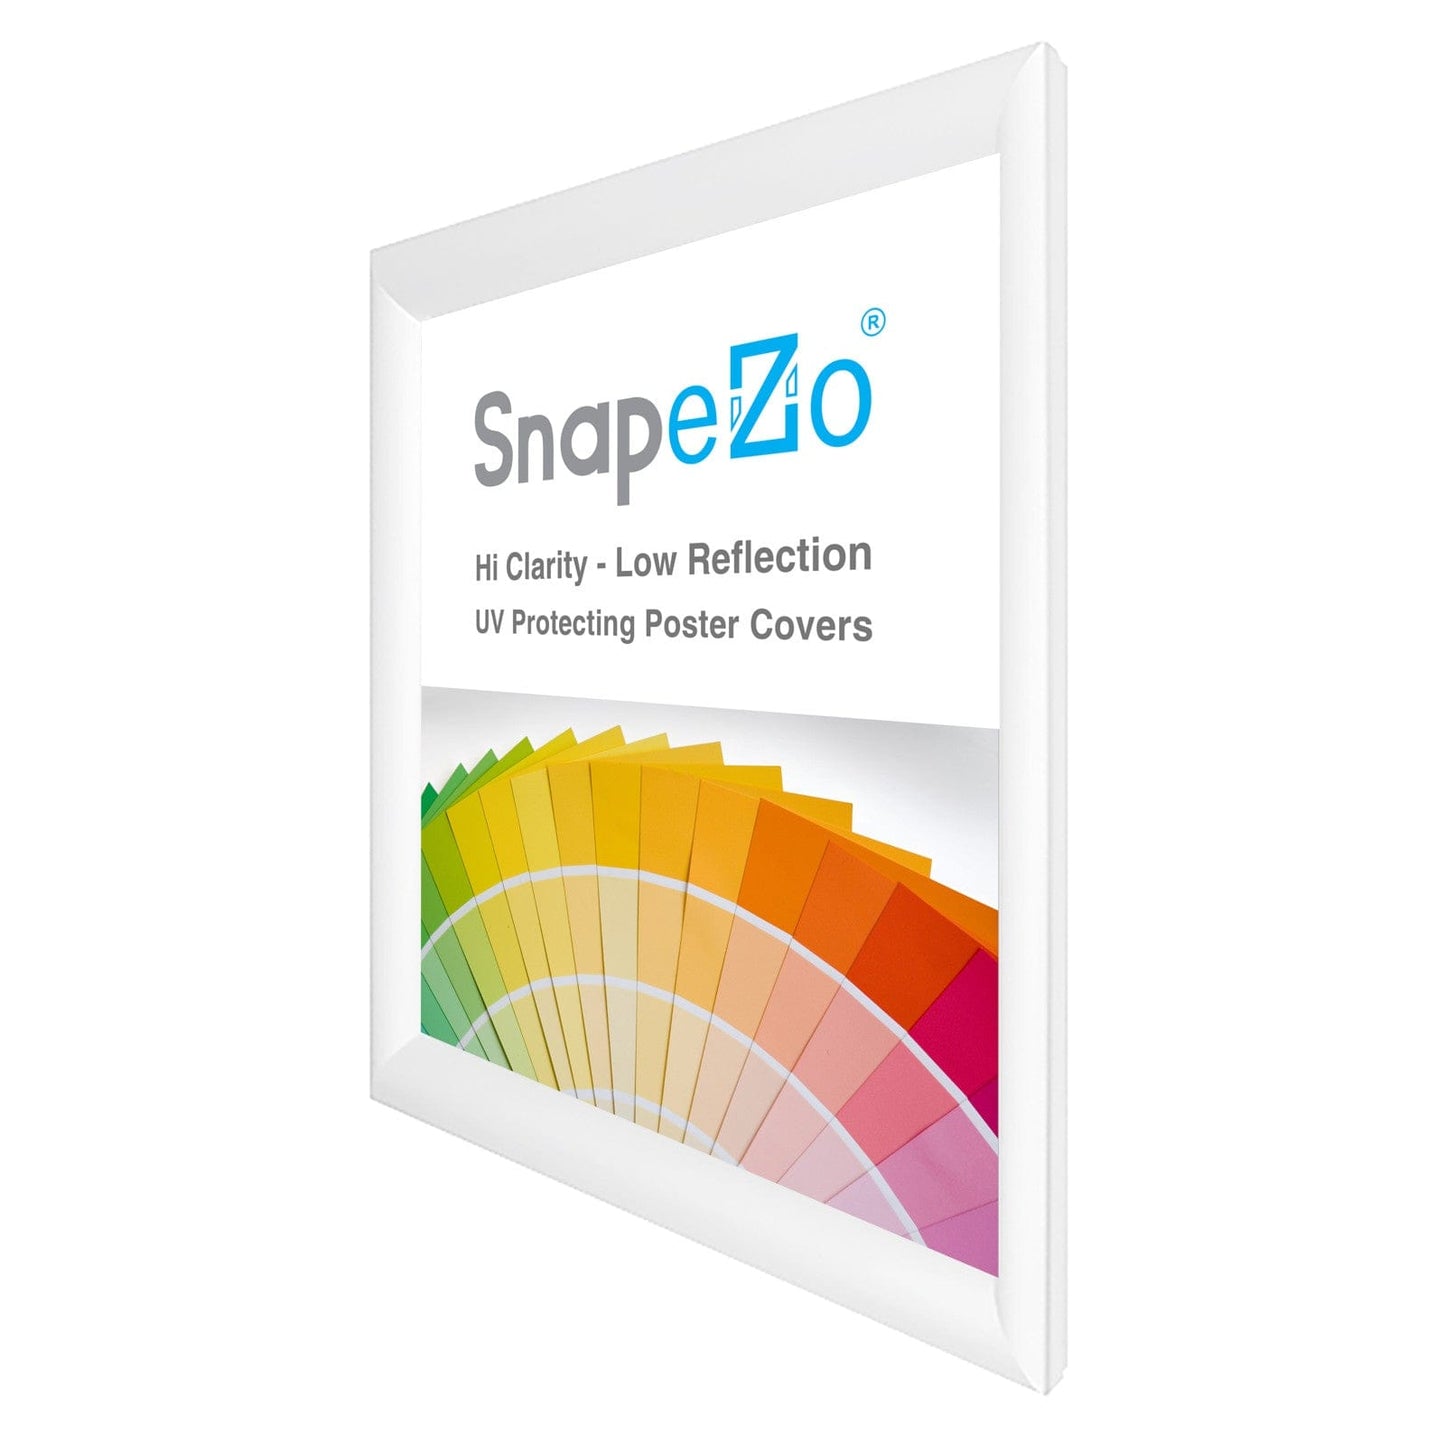 25x30 White SnapeZo® Snap Frame - 1.2" Profile - Snap Frames Direct